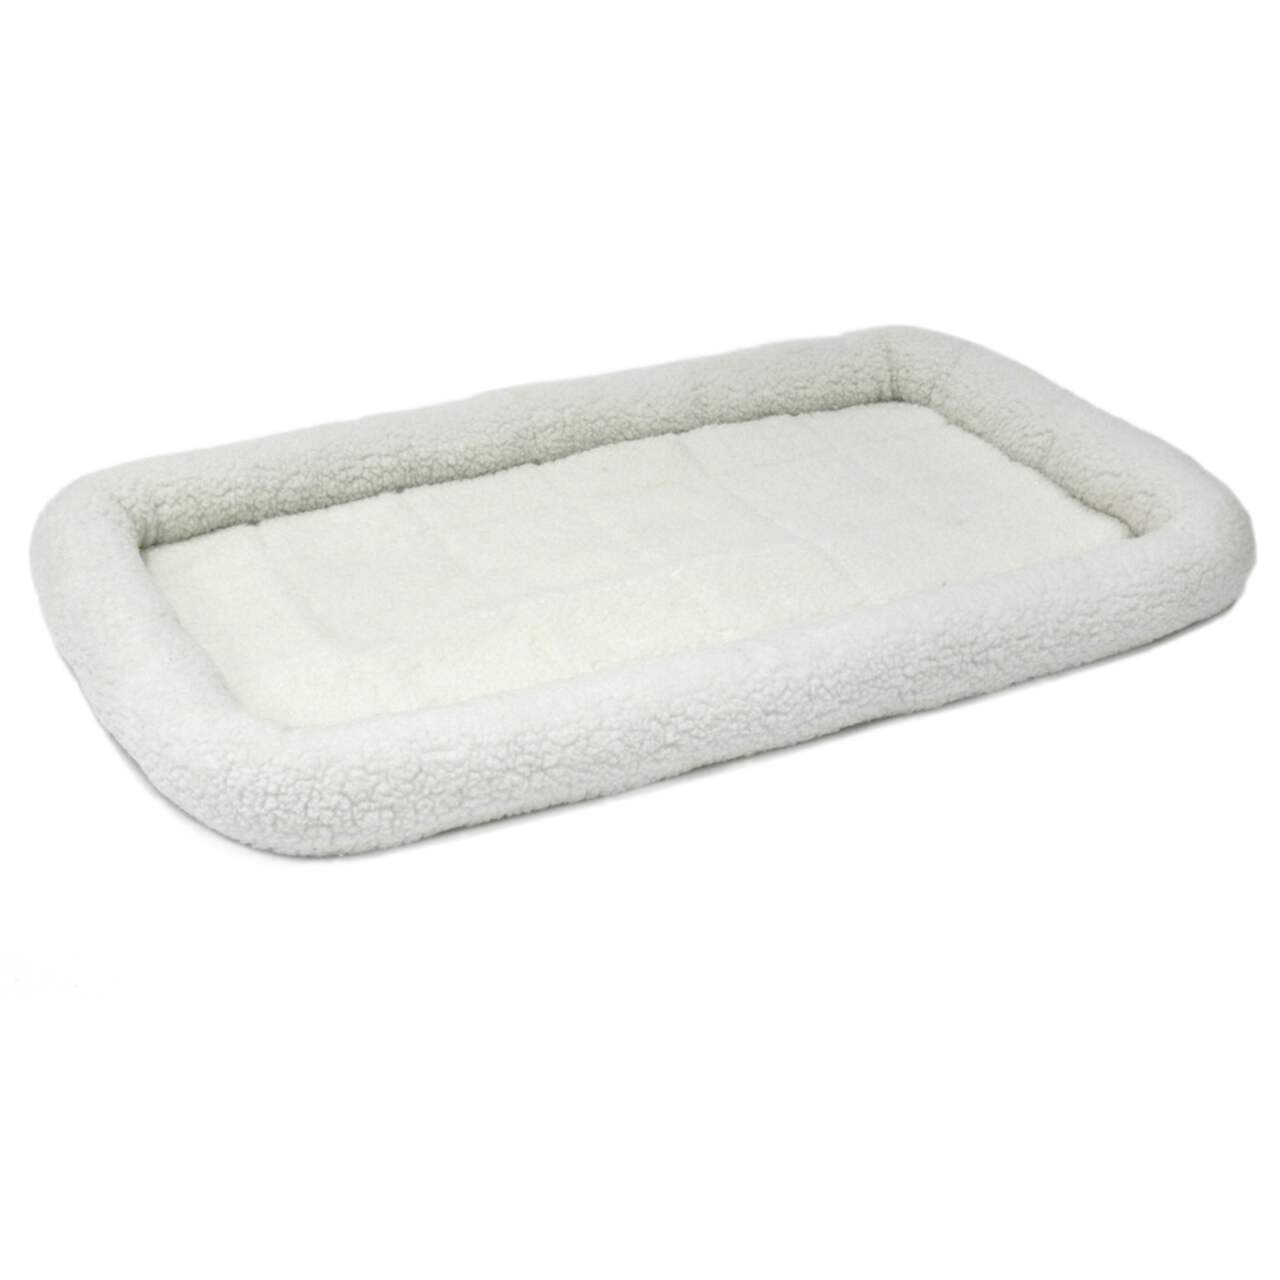 Comfyland Ultra-Soft Fleece Pet Bed, Washable, Assorted Sizes